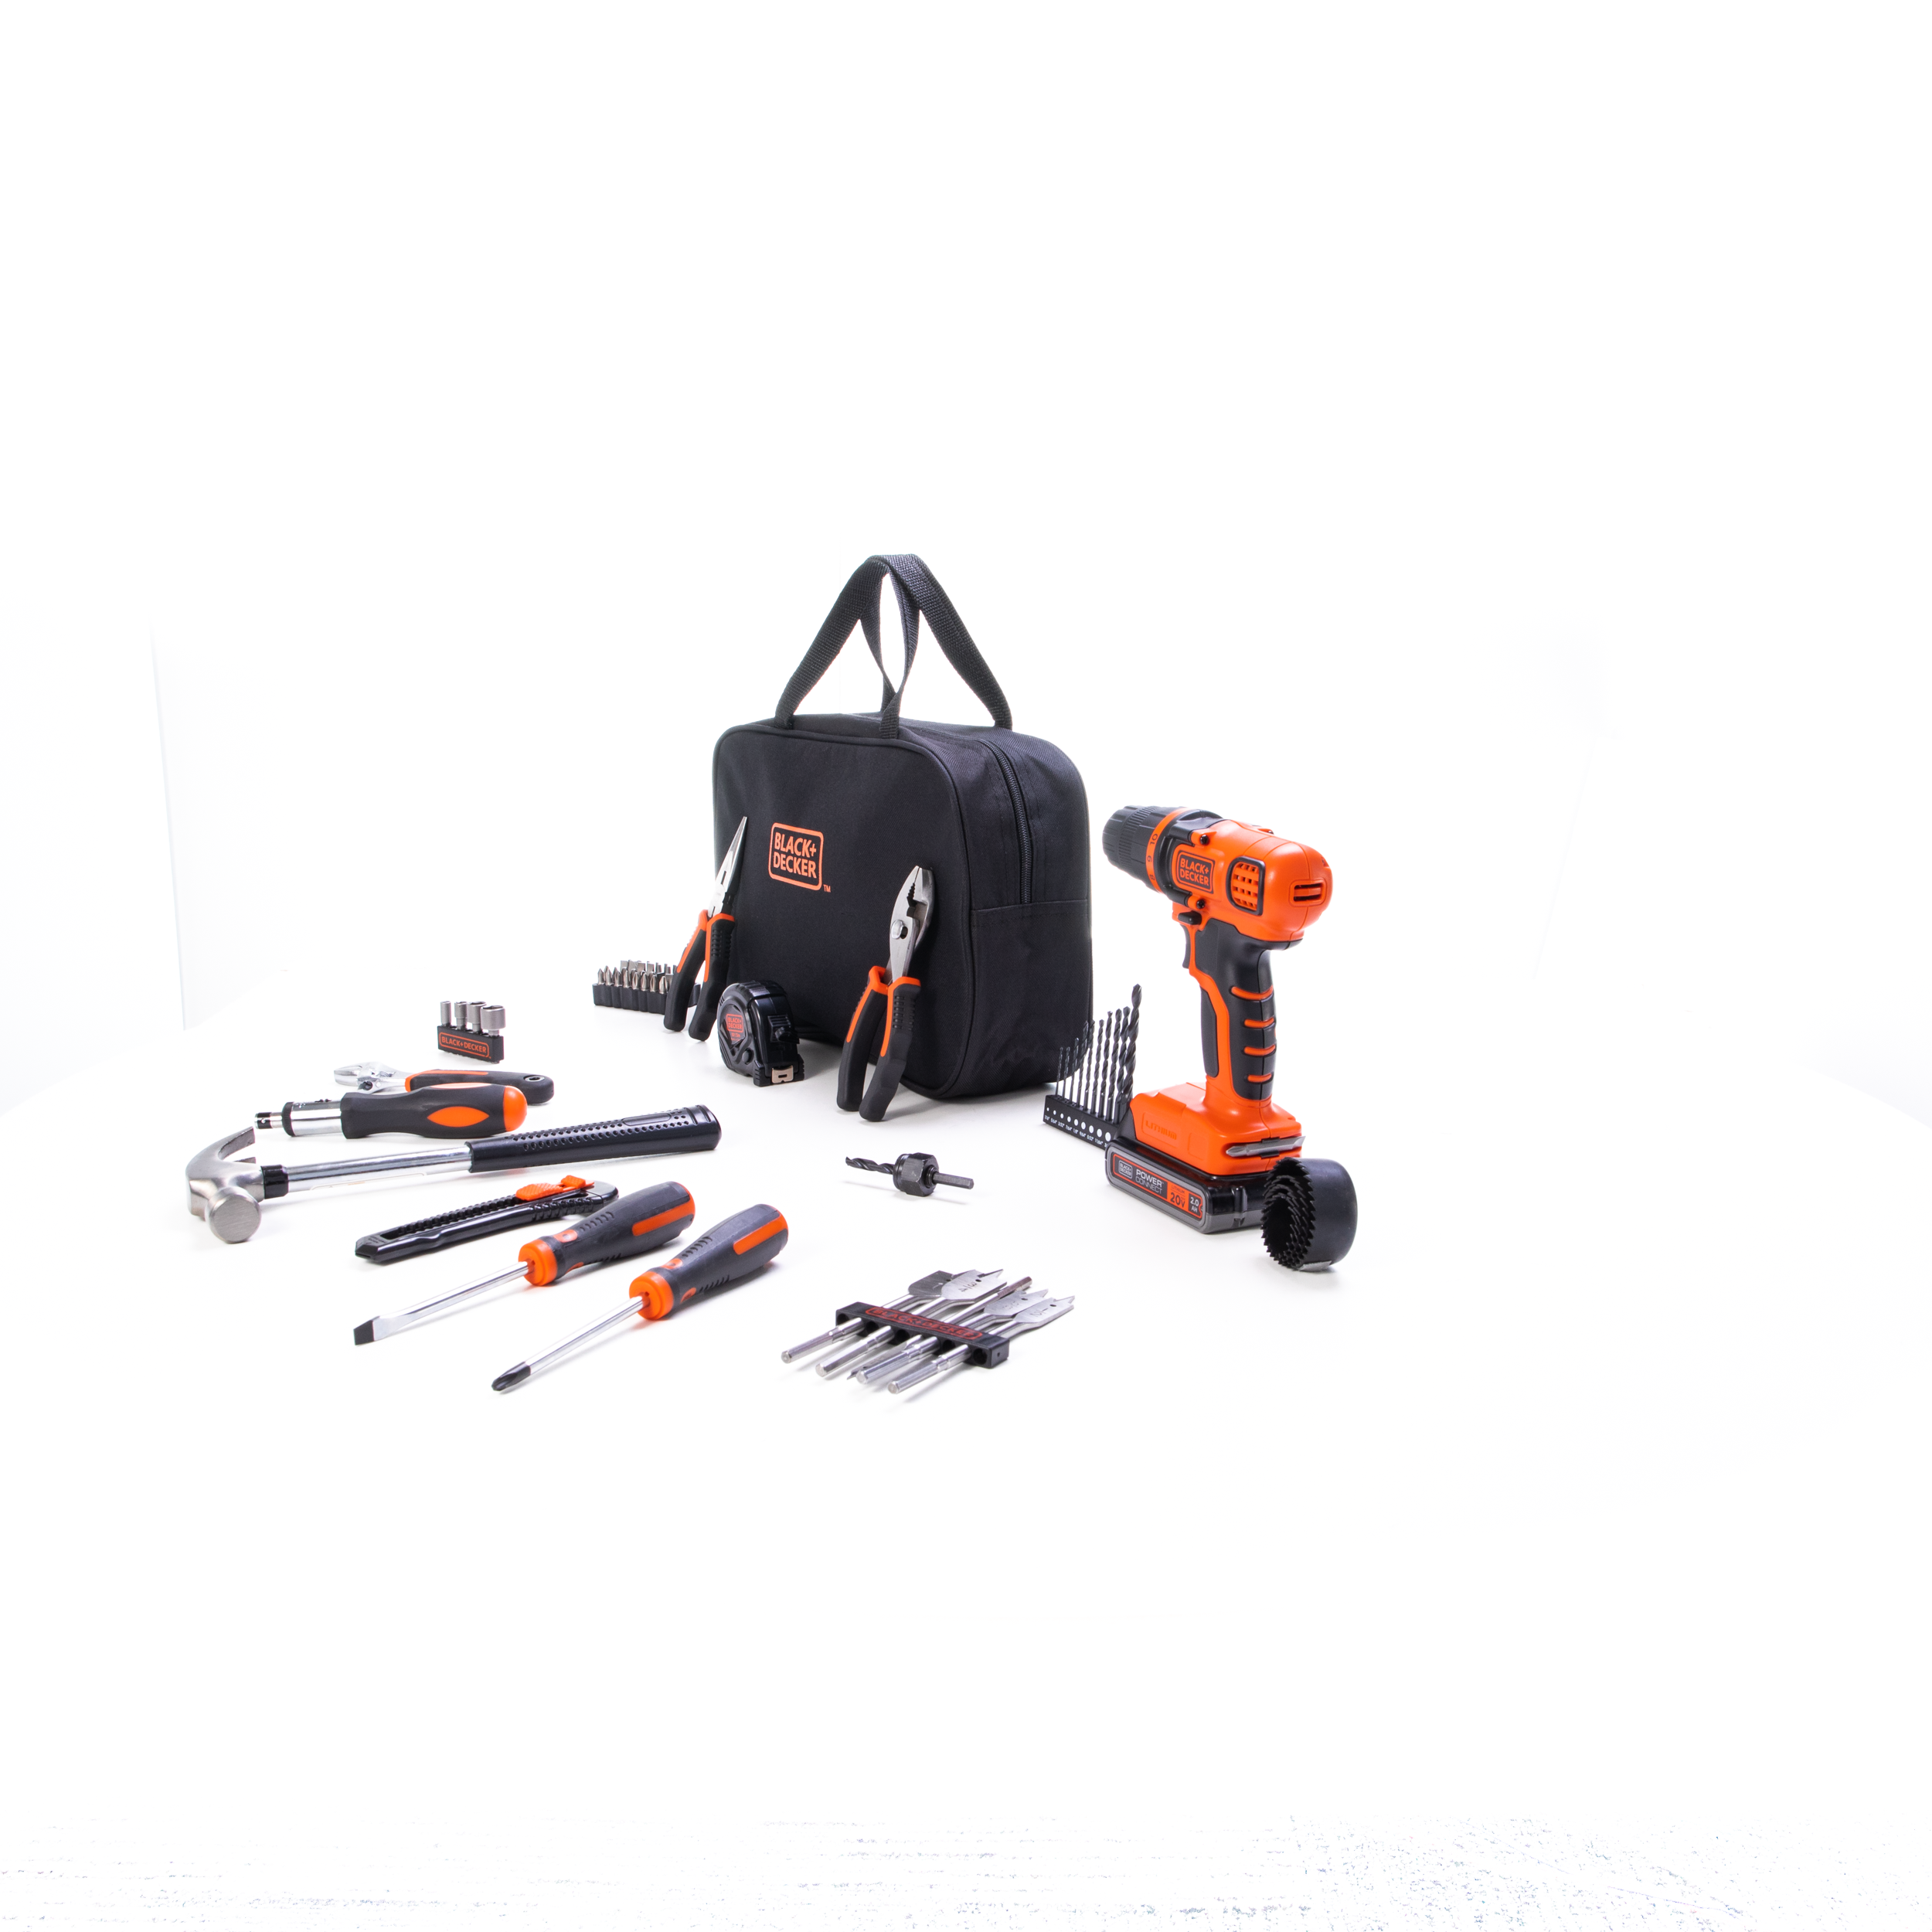 BLACK+DECKER 20V Max Drill & Home Tool Kit, 68 Piece - Damaged Box